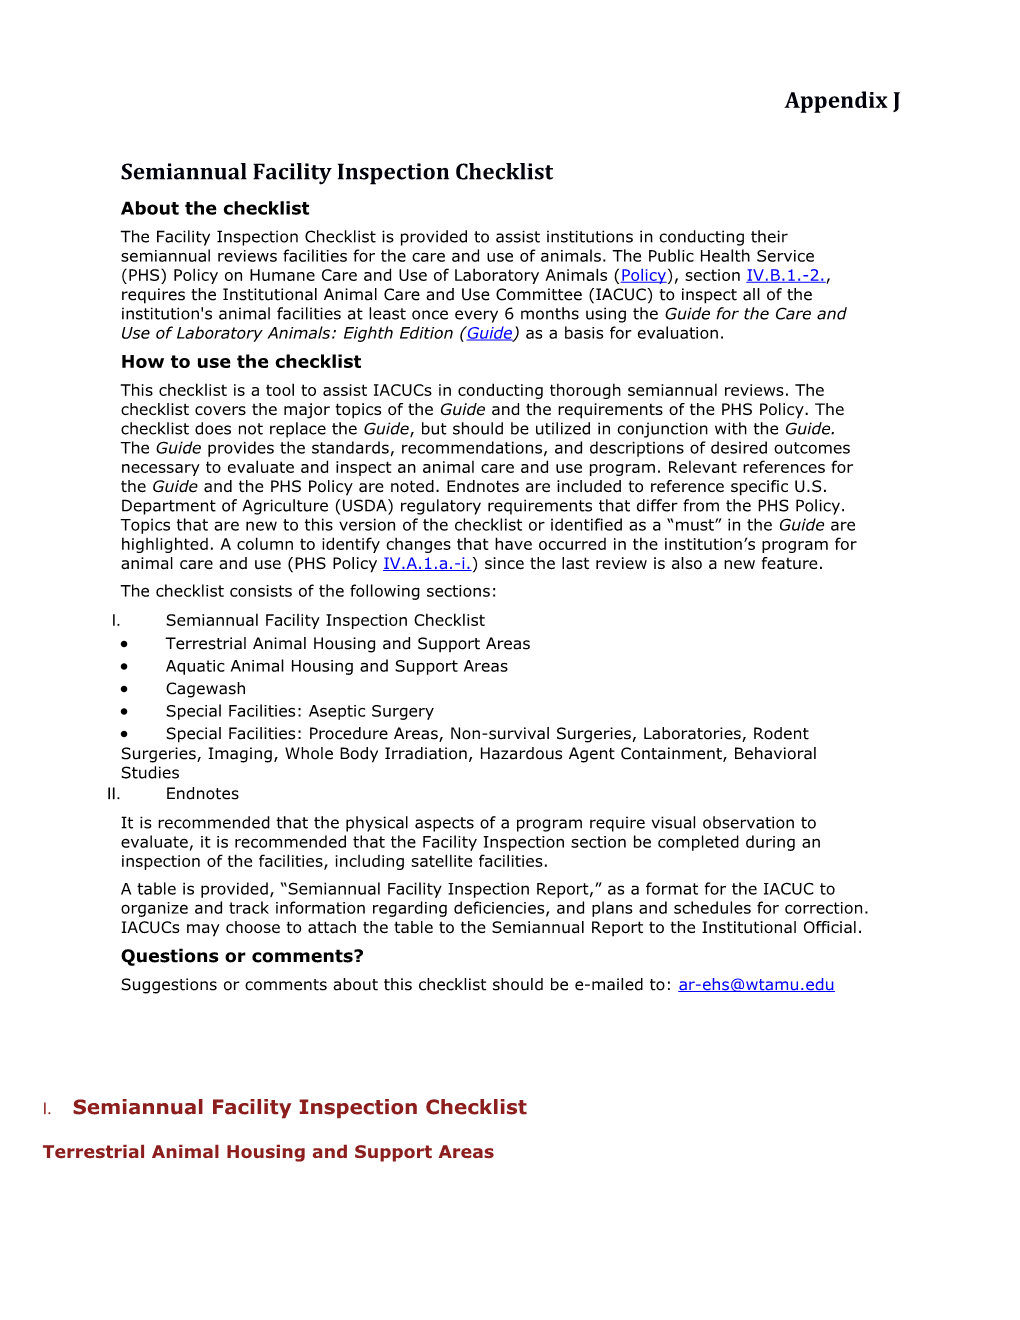 Semiannual Facility Inspection Checklist